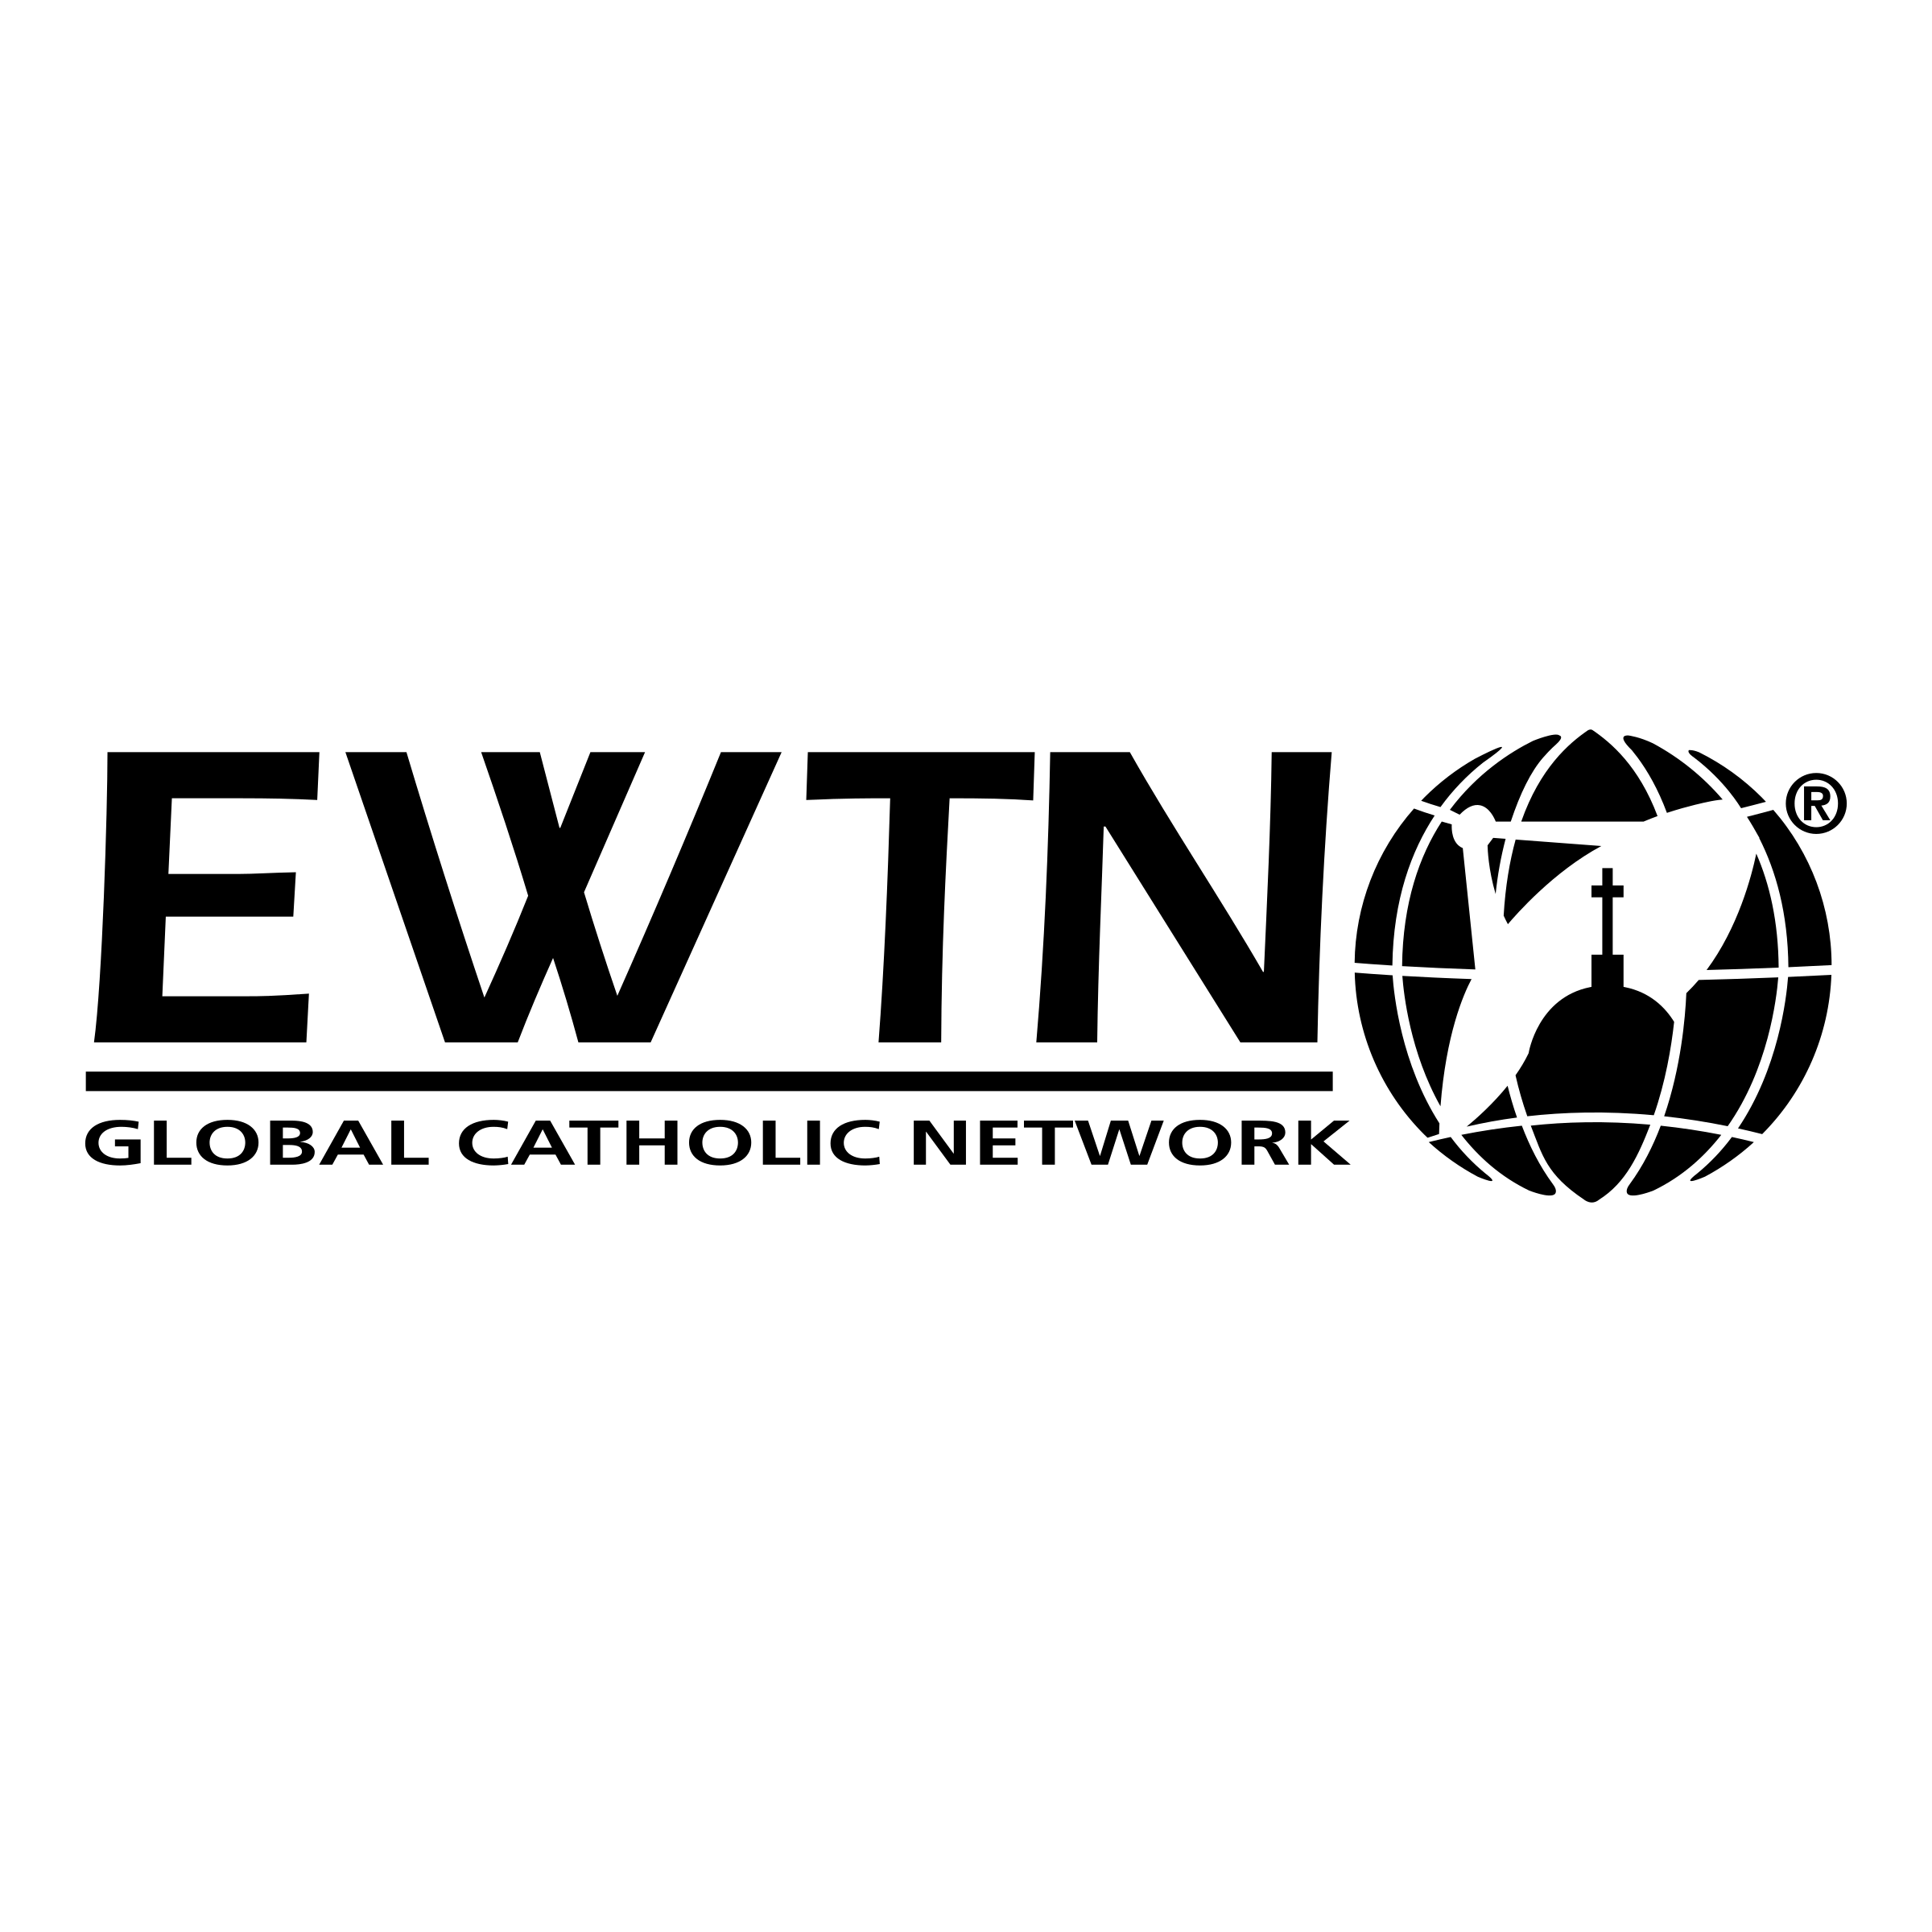 EWTN Logo - EWTN Logo PNG Transparent & SVG Vector - Freebie Supply